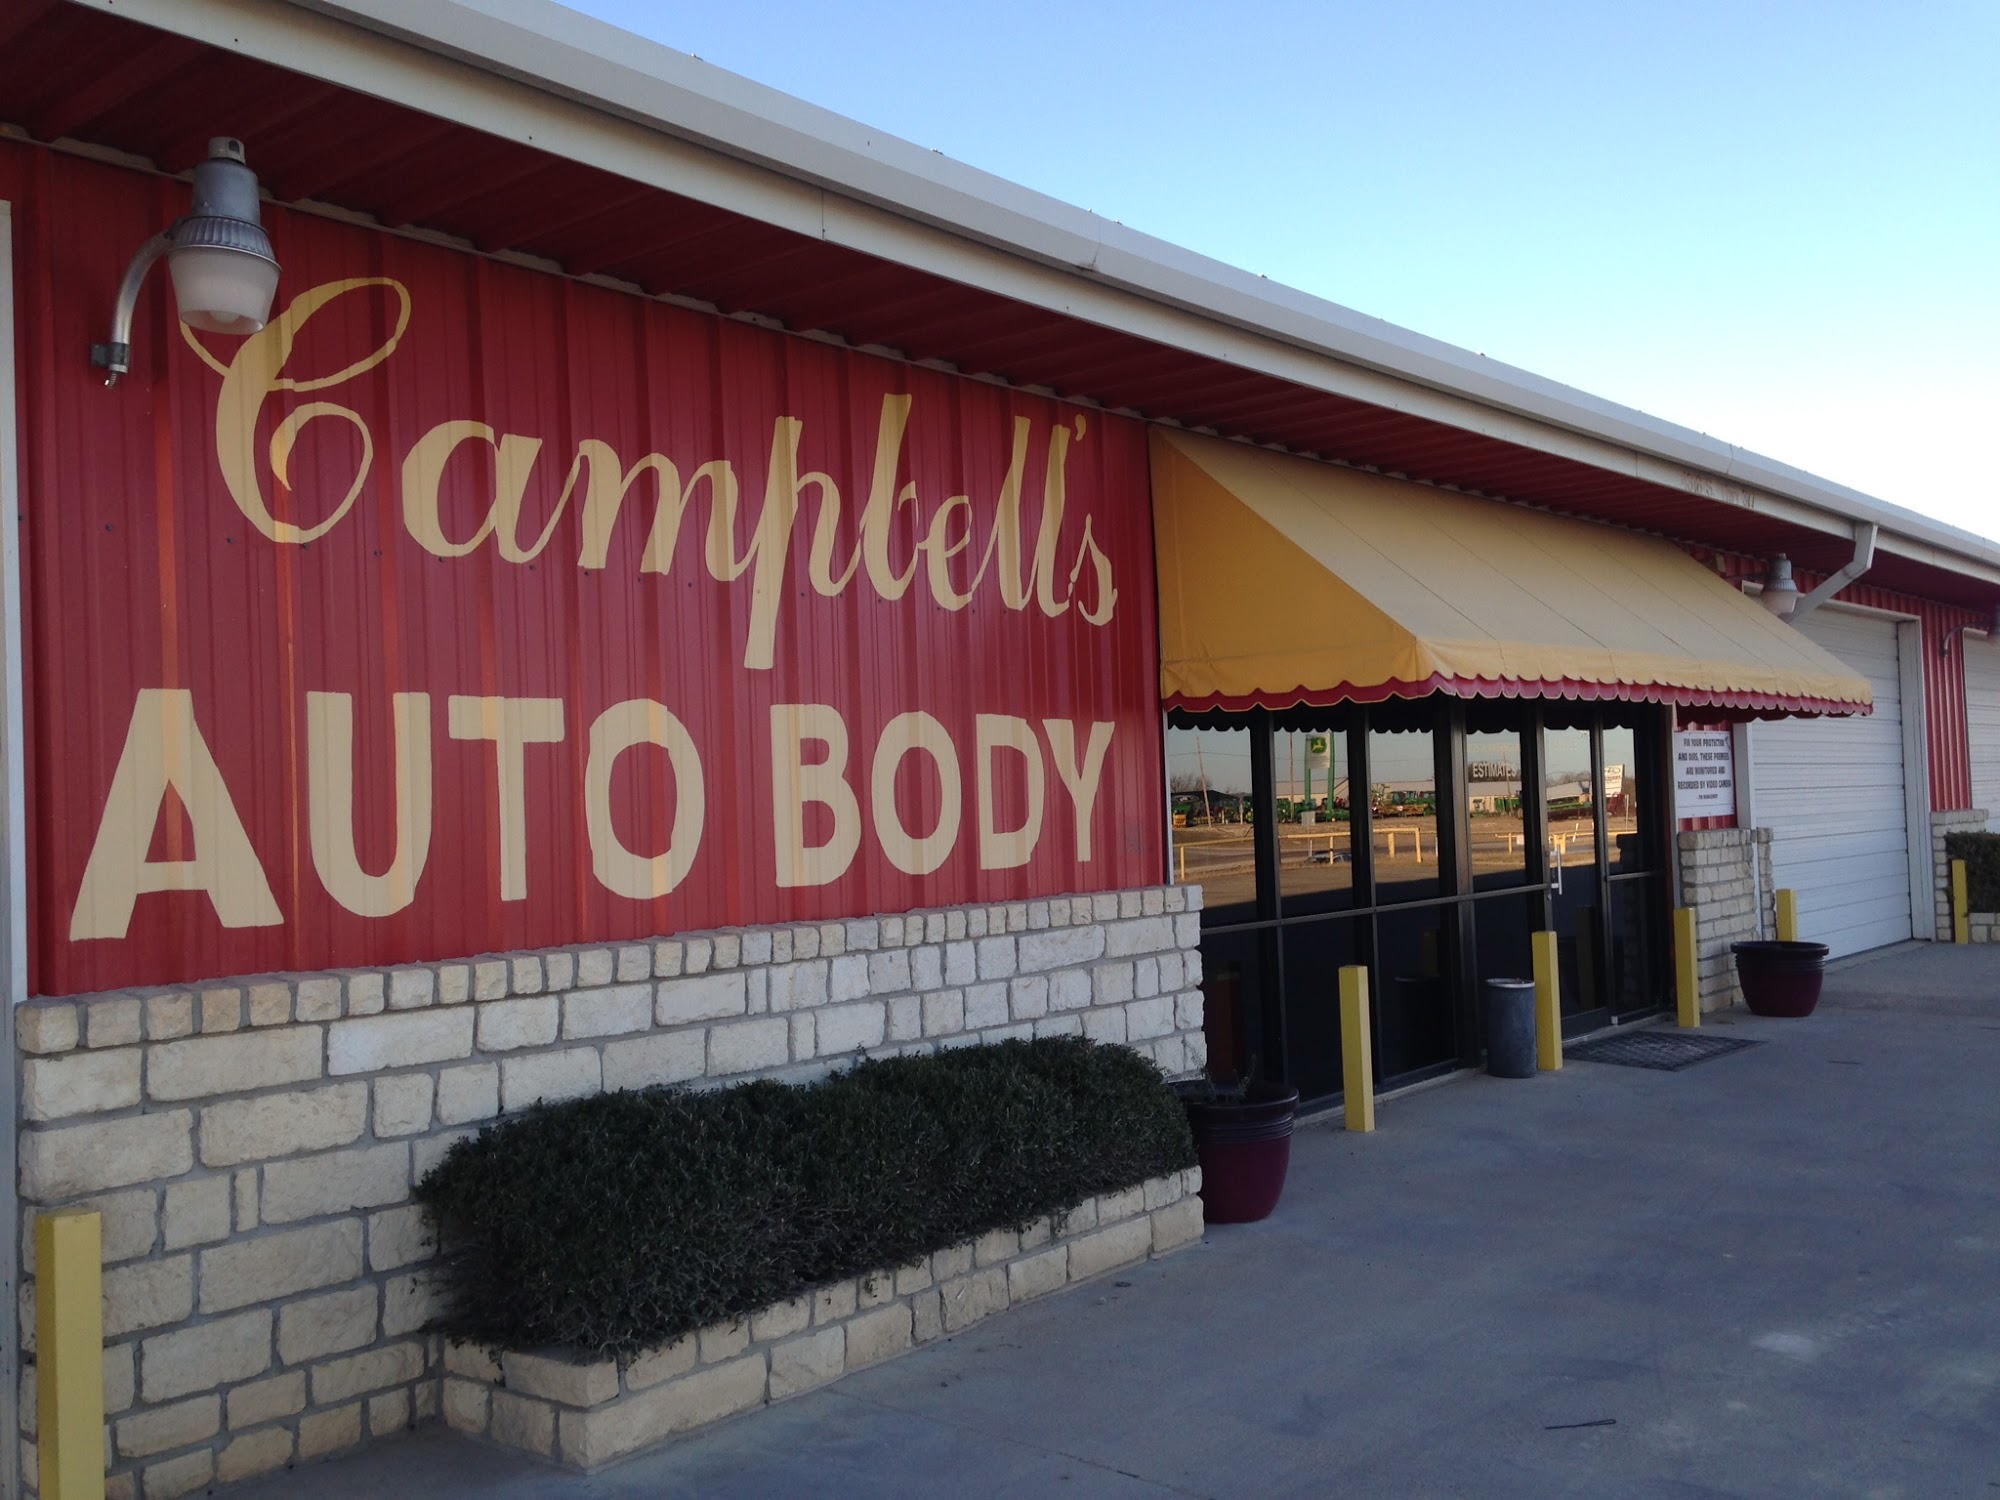 Campbell Auto Body